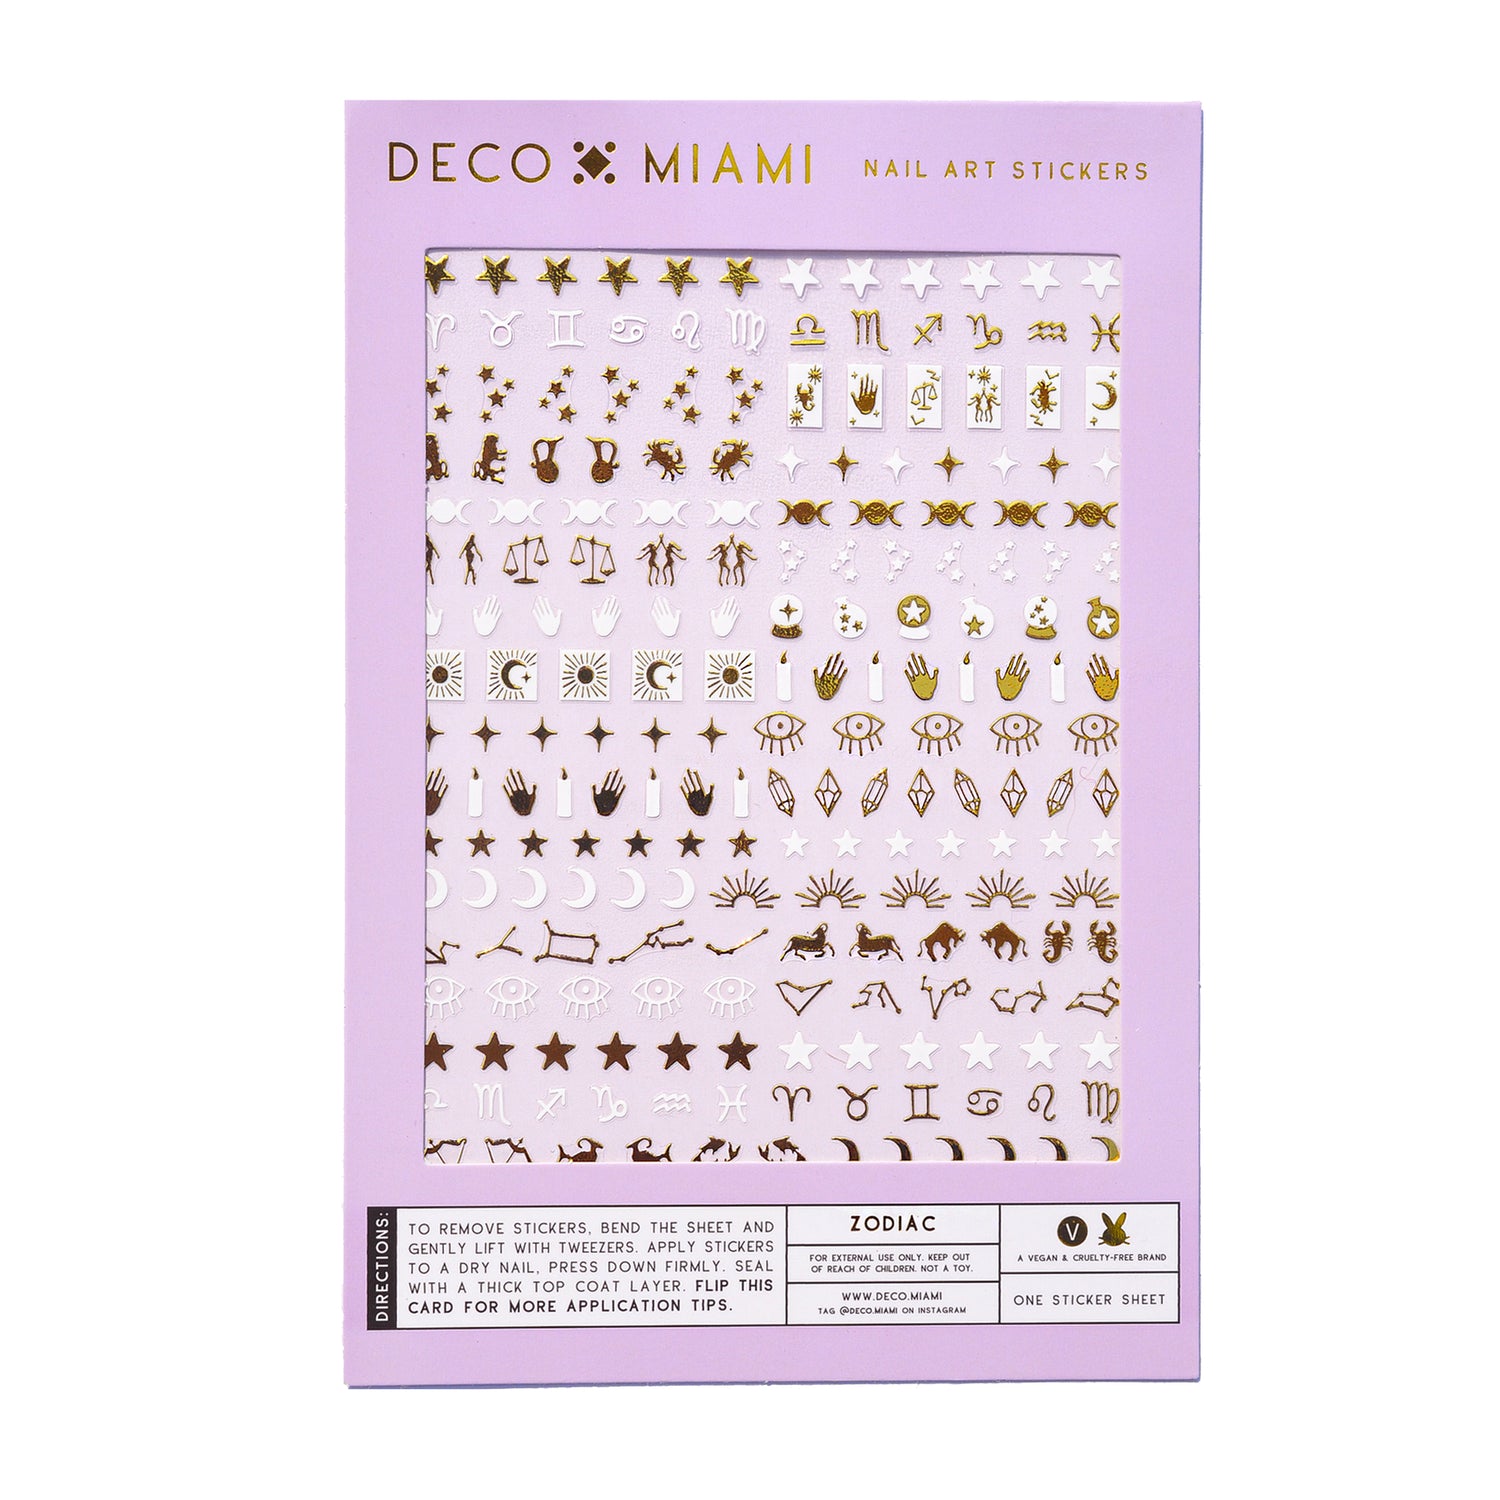 Deco Miami Nail Art Stickers at Friends NYC in Brooklyn